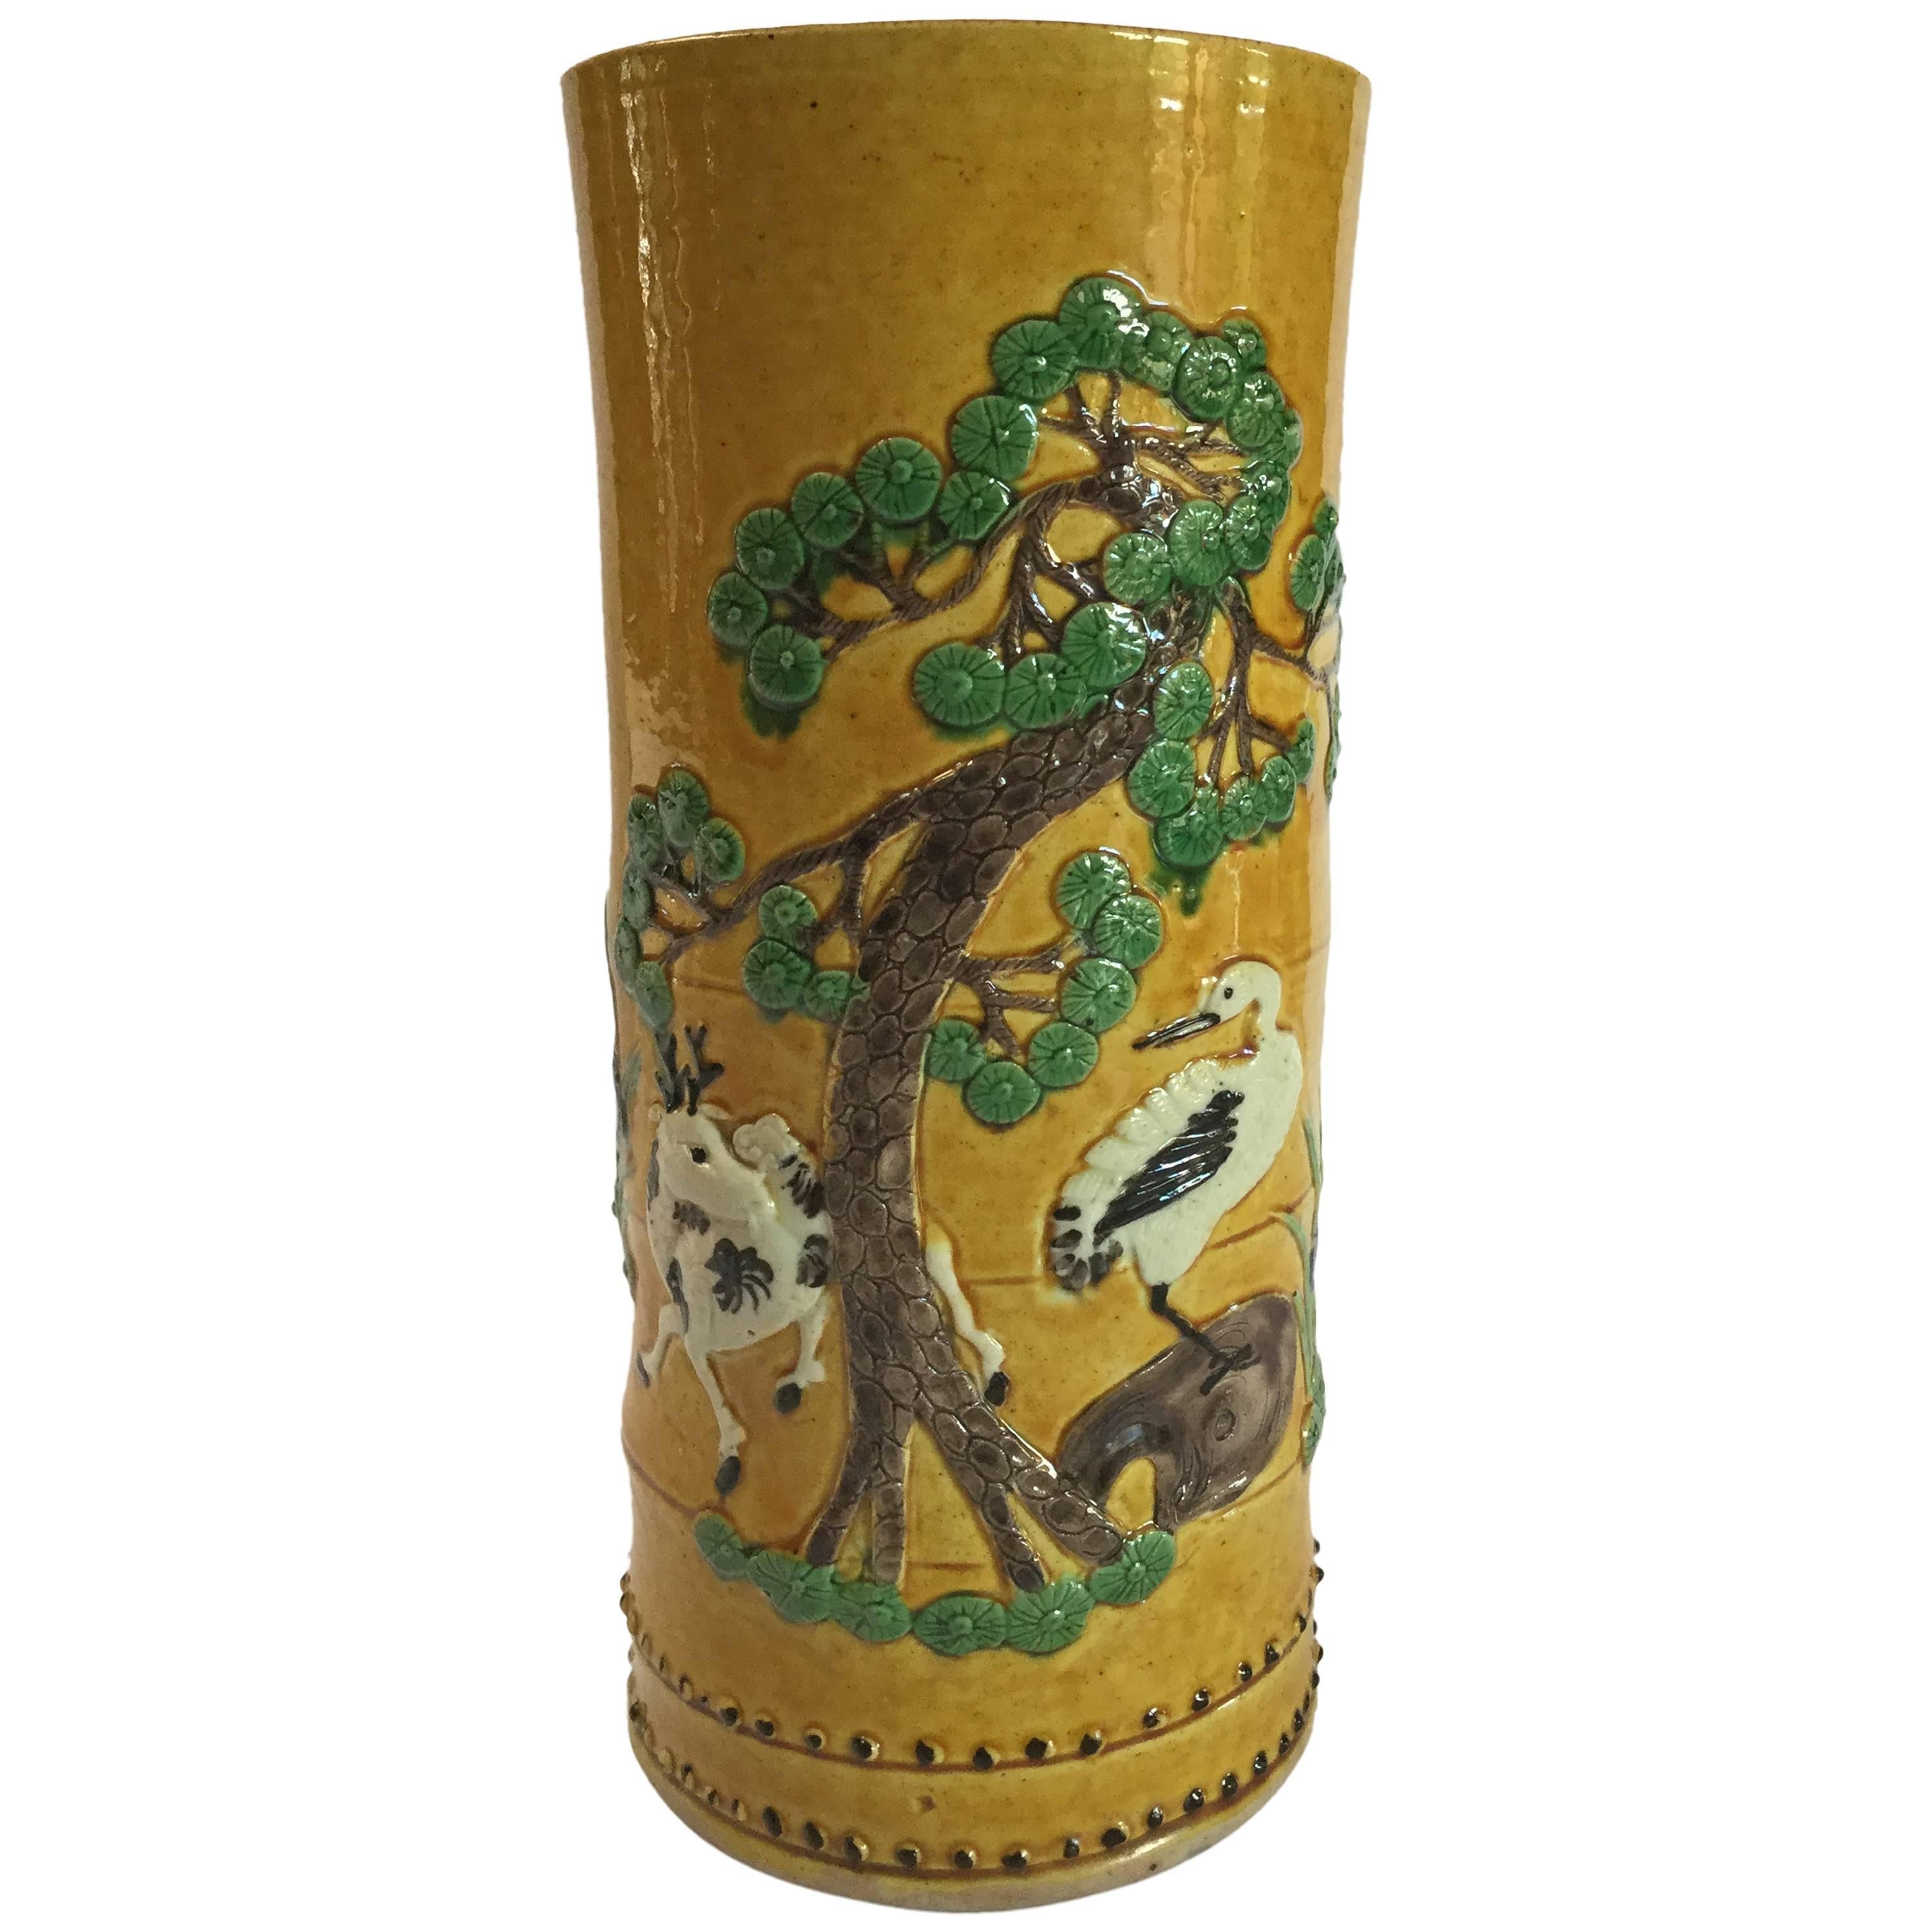 Arrow Vase in the Spirit of the Kangxi Period